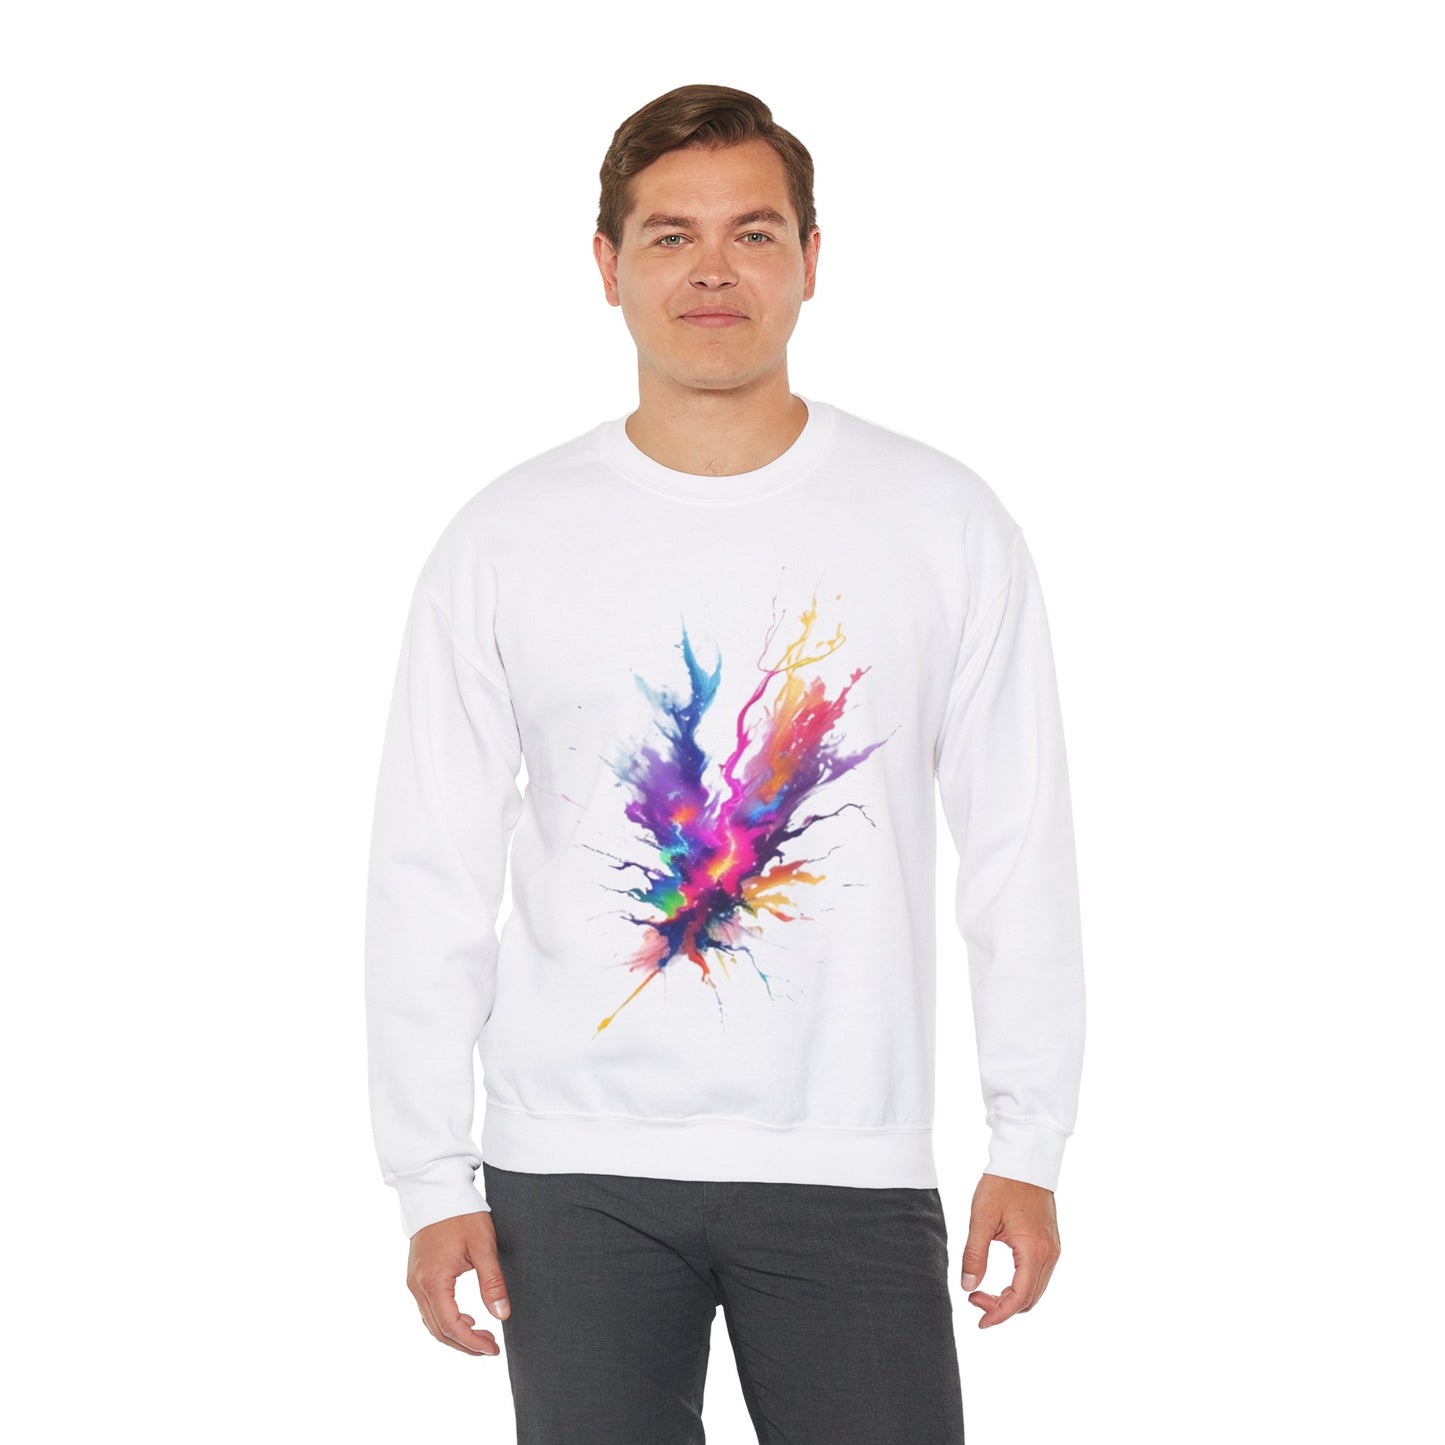 Messy Colourful Lightning Bolts - Unisex Crewneck Sweatshirt